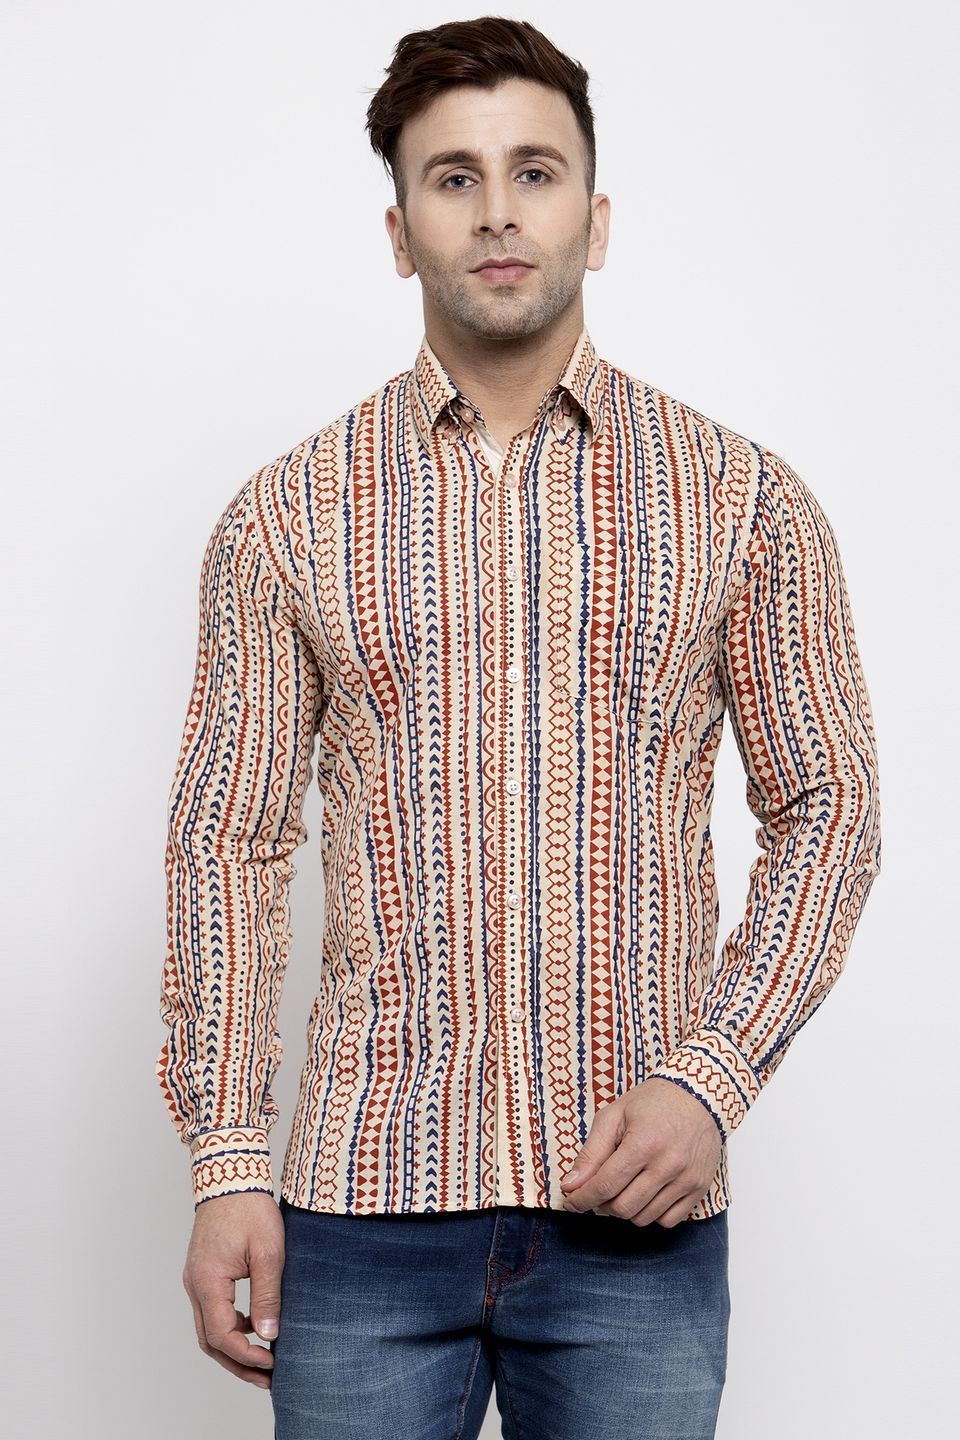 WINTAGE Men's Jaipur Cotton Tropical Hawaiian Batik Casual Shirt: Cream